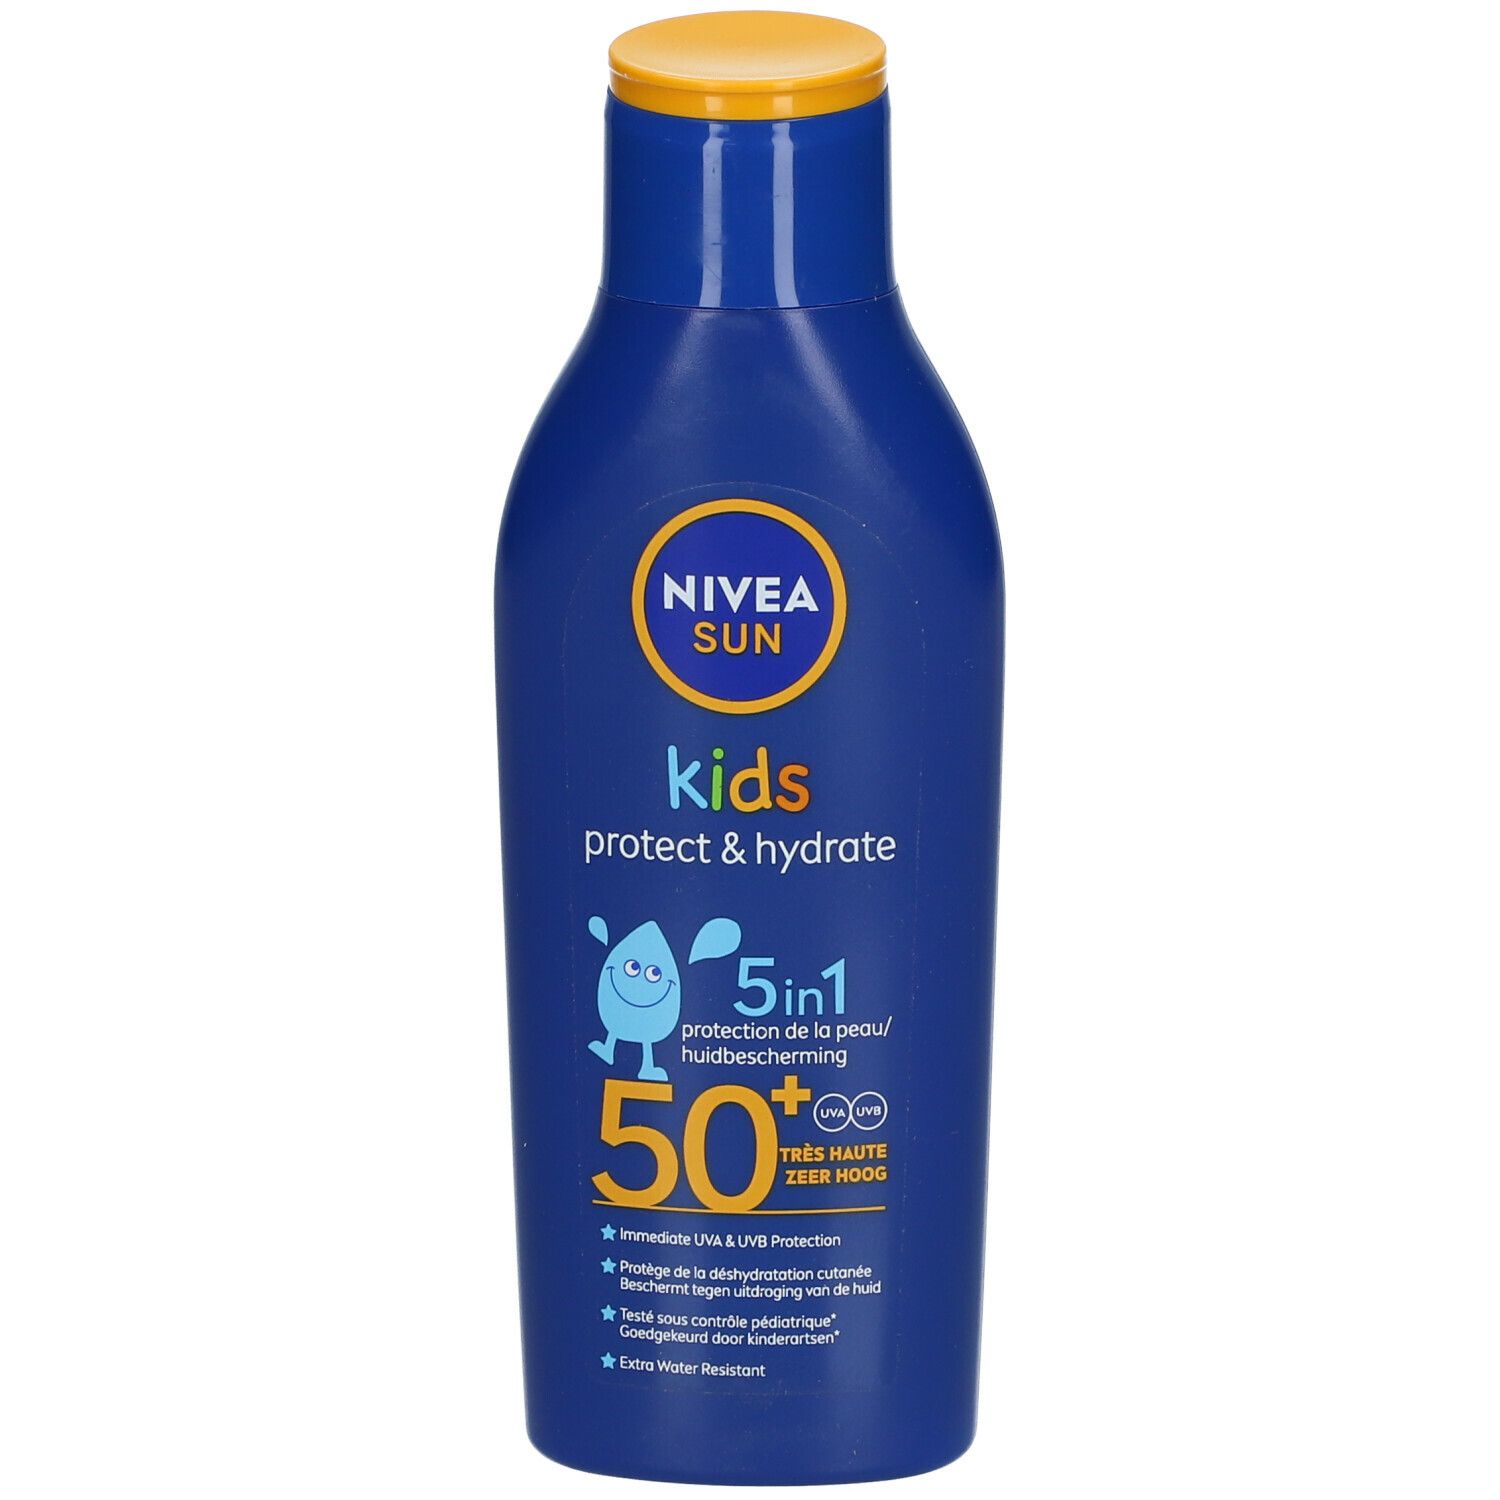 Nivea Sun Kids Protect & Hydrate 5 en 1 Spf50+